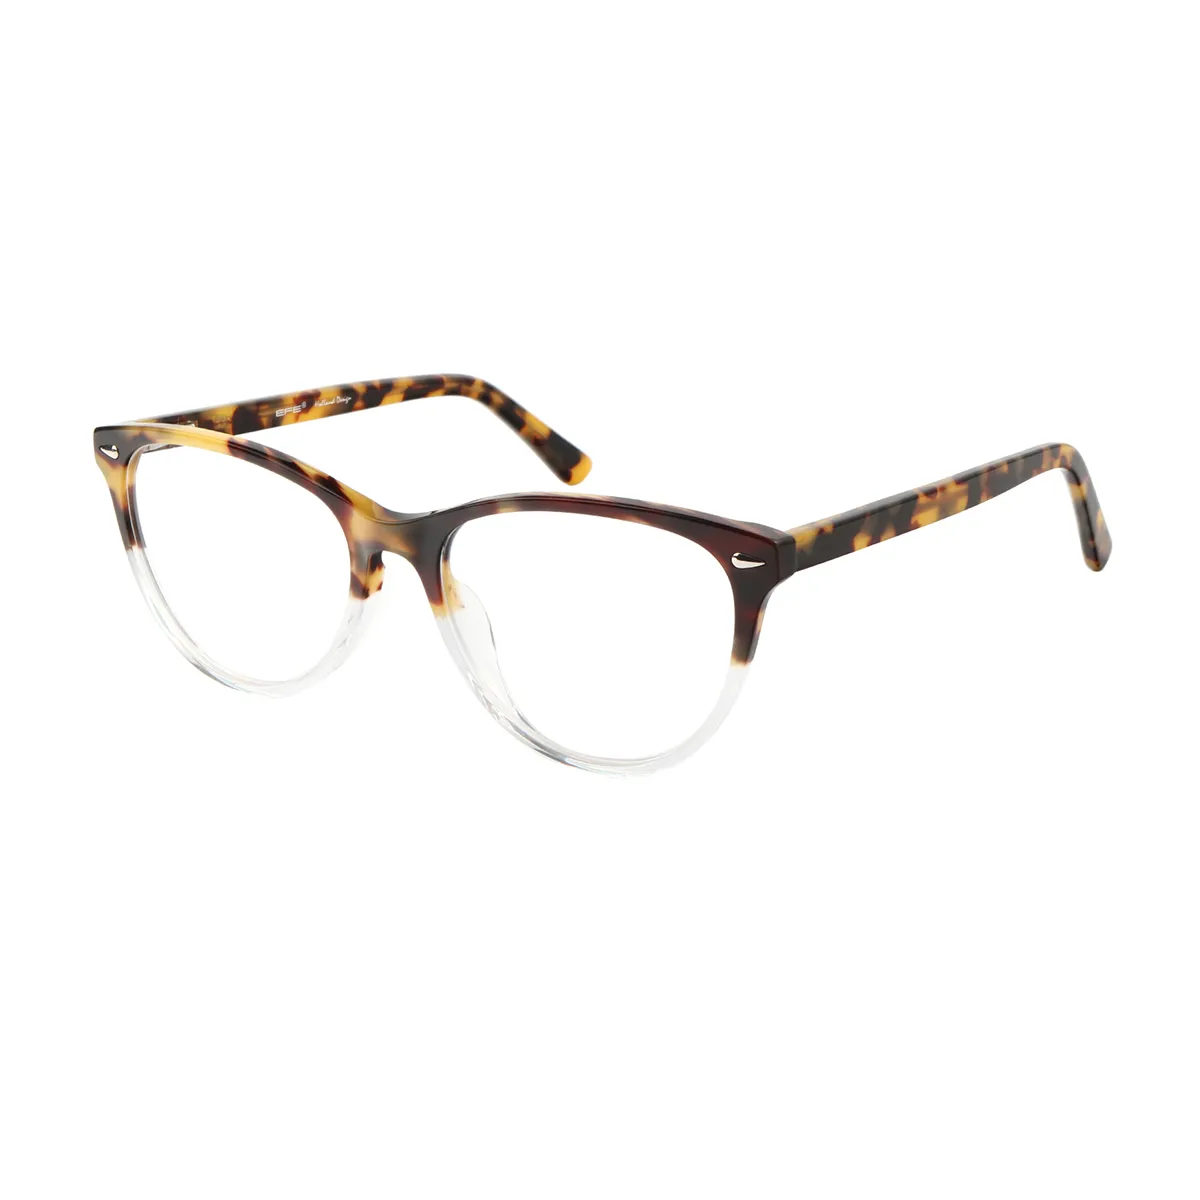 Jone - Oval Yellow-Tortoiseshell Glasses for Women